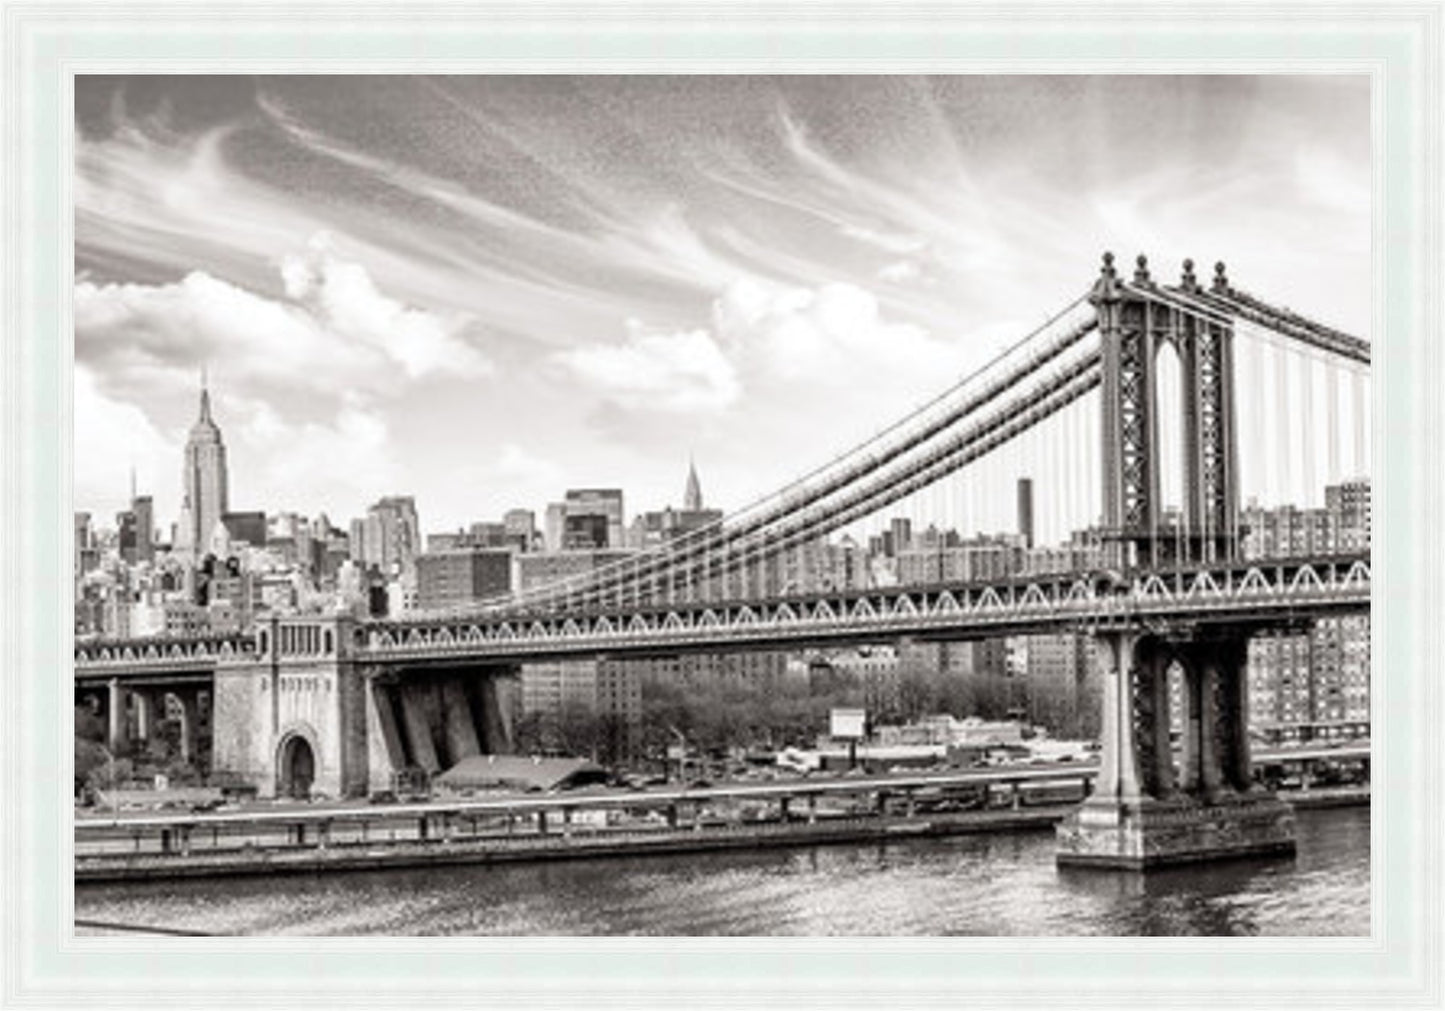 Bridge to the Big Apple, New York - Slim Frame